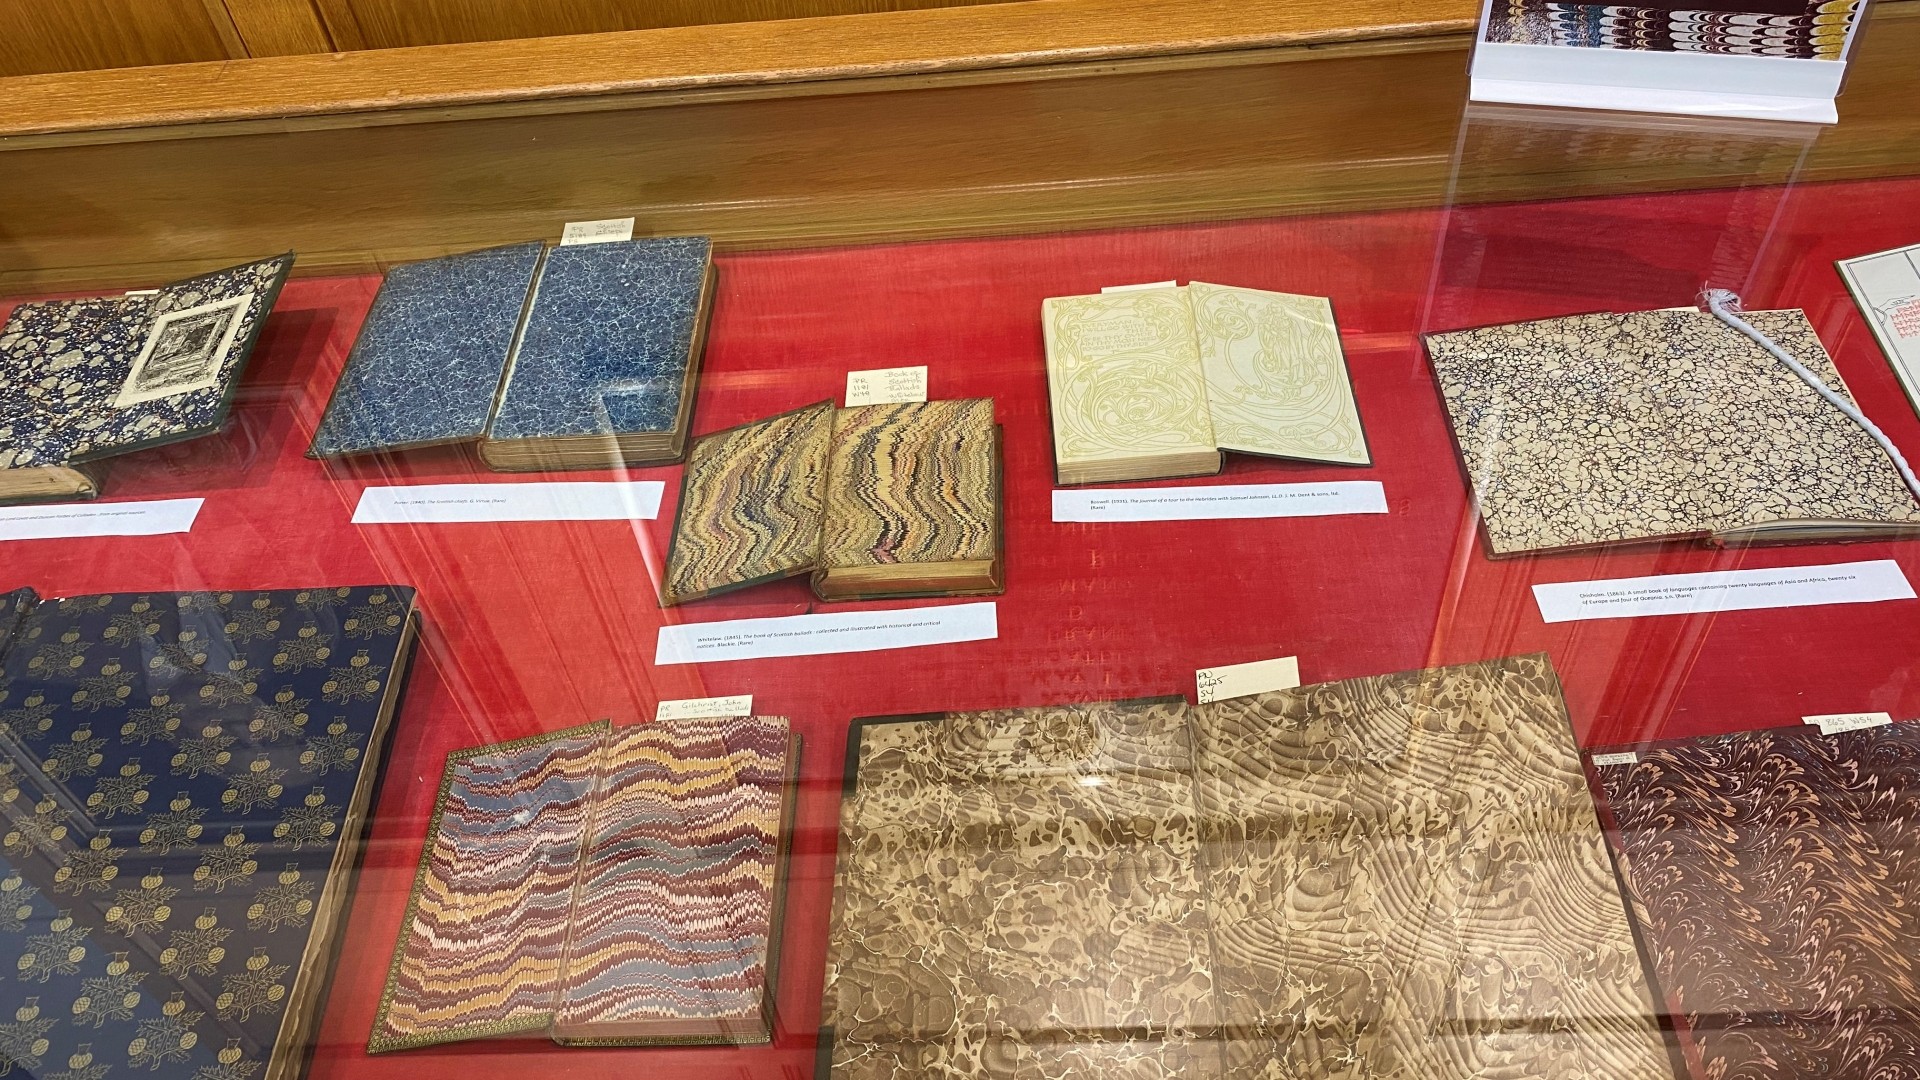 Museum display of Rare Book Endpapers